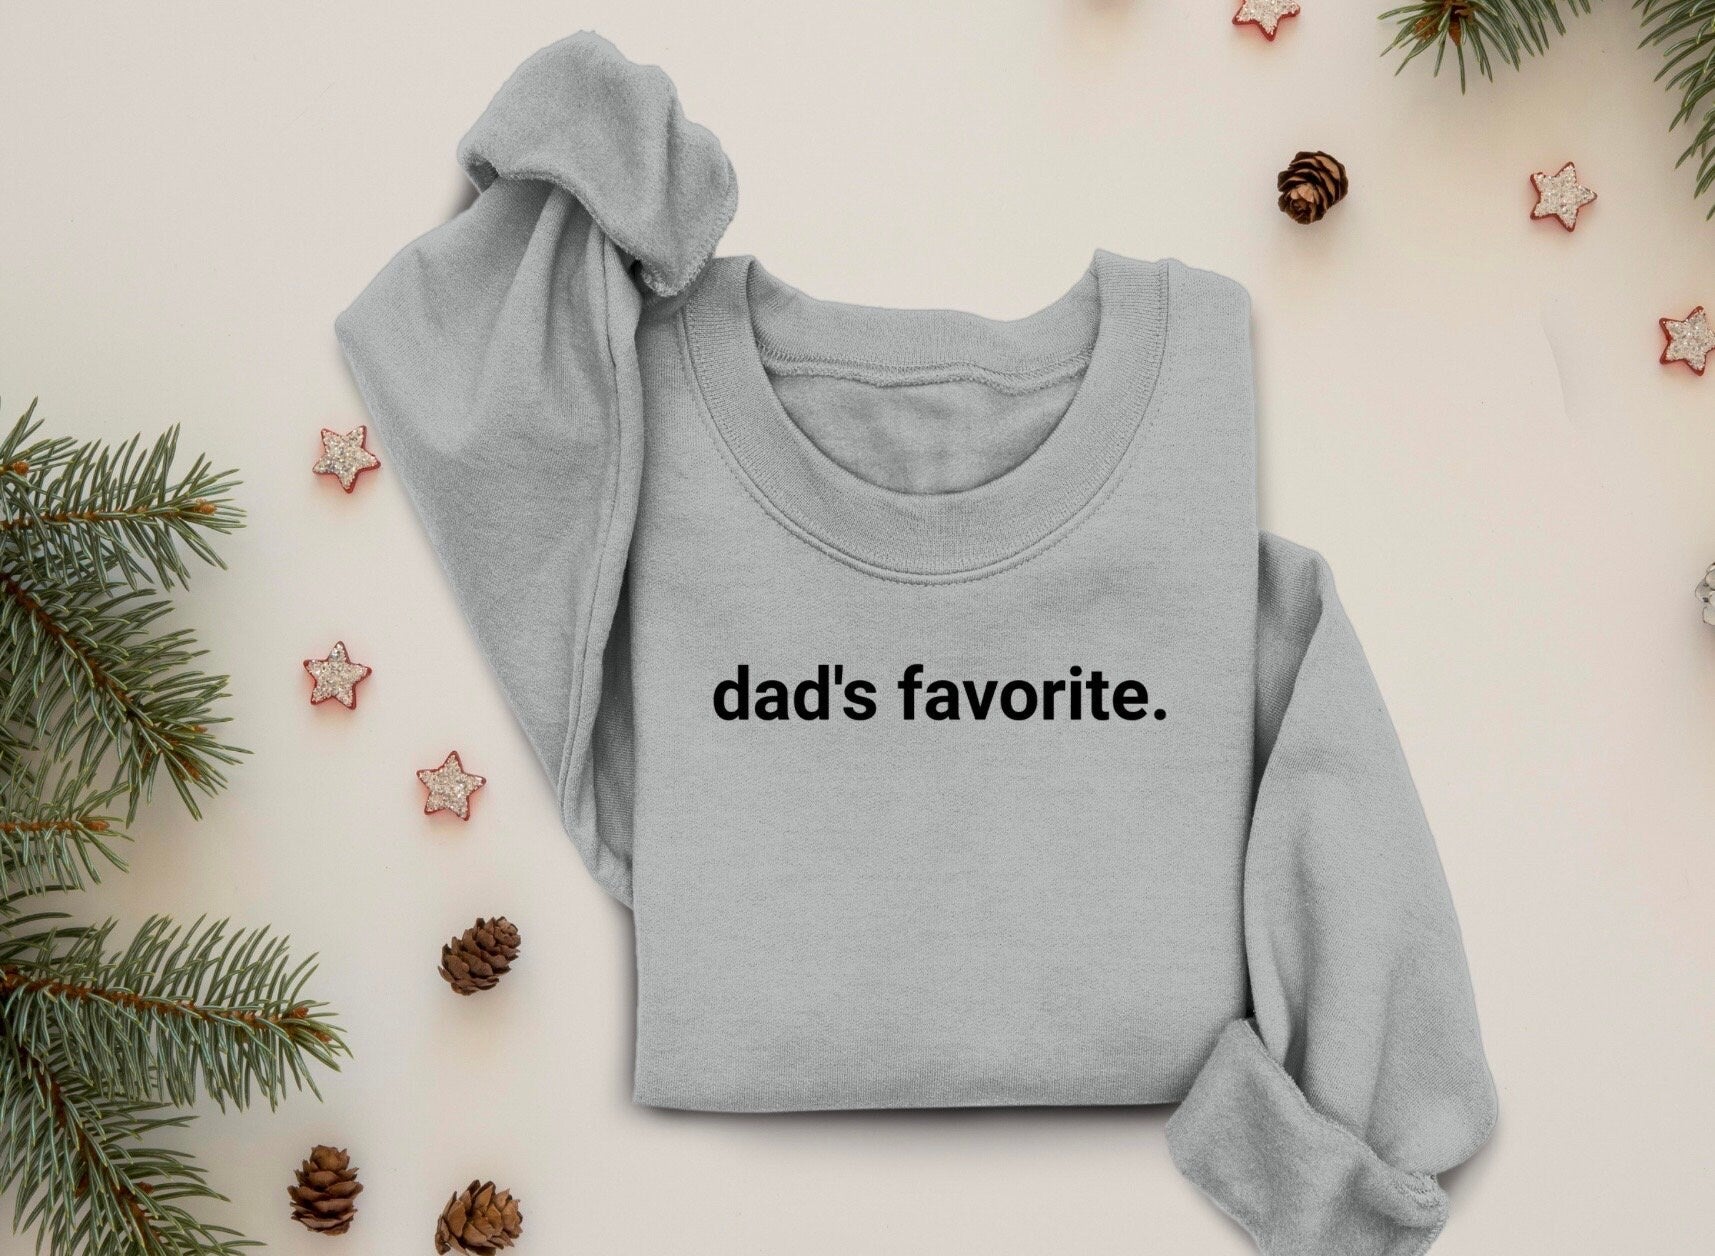 Dads Favorite Sweatshirt, Dads Favorite Shirt, Dads Favorite Crewneck, Dads Favorite hoodie, Oversized Sweater, Comfy Sweatshirt, Dad Gift